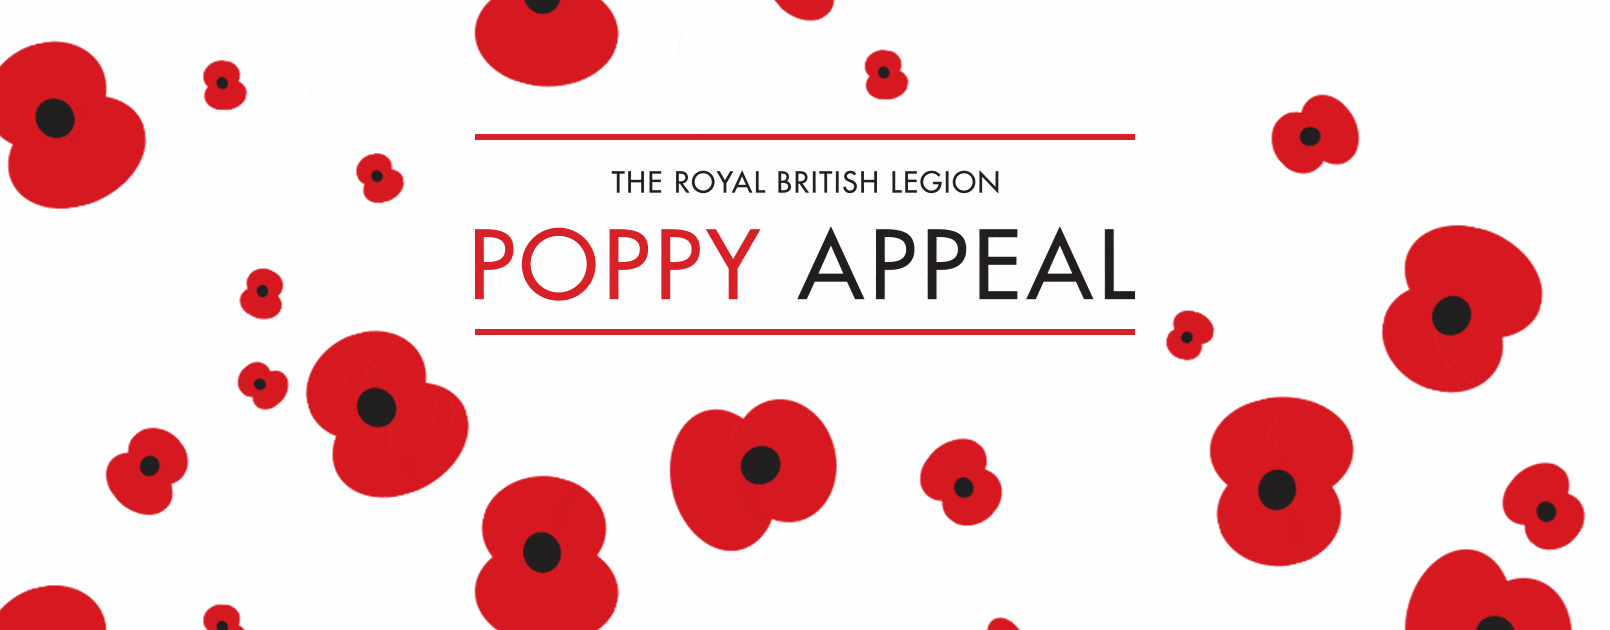 Poppy Appeal Logo - Poppy Appeal 2018 | The Royal British Legion